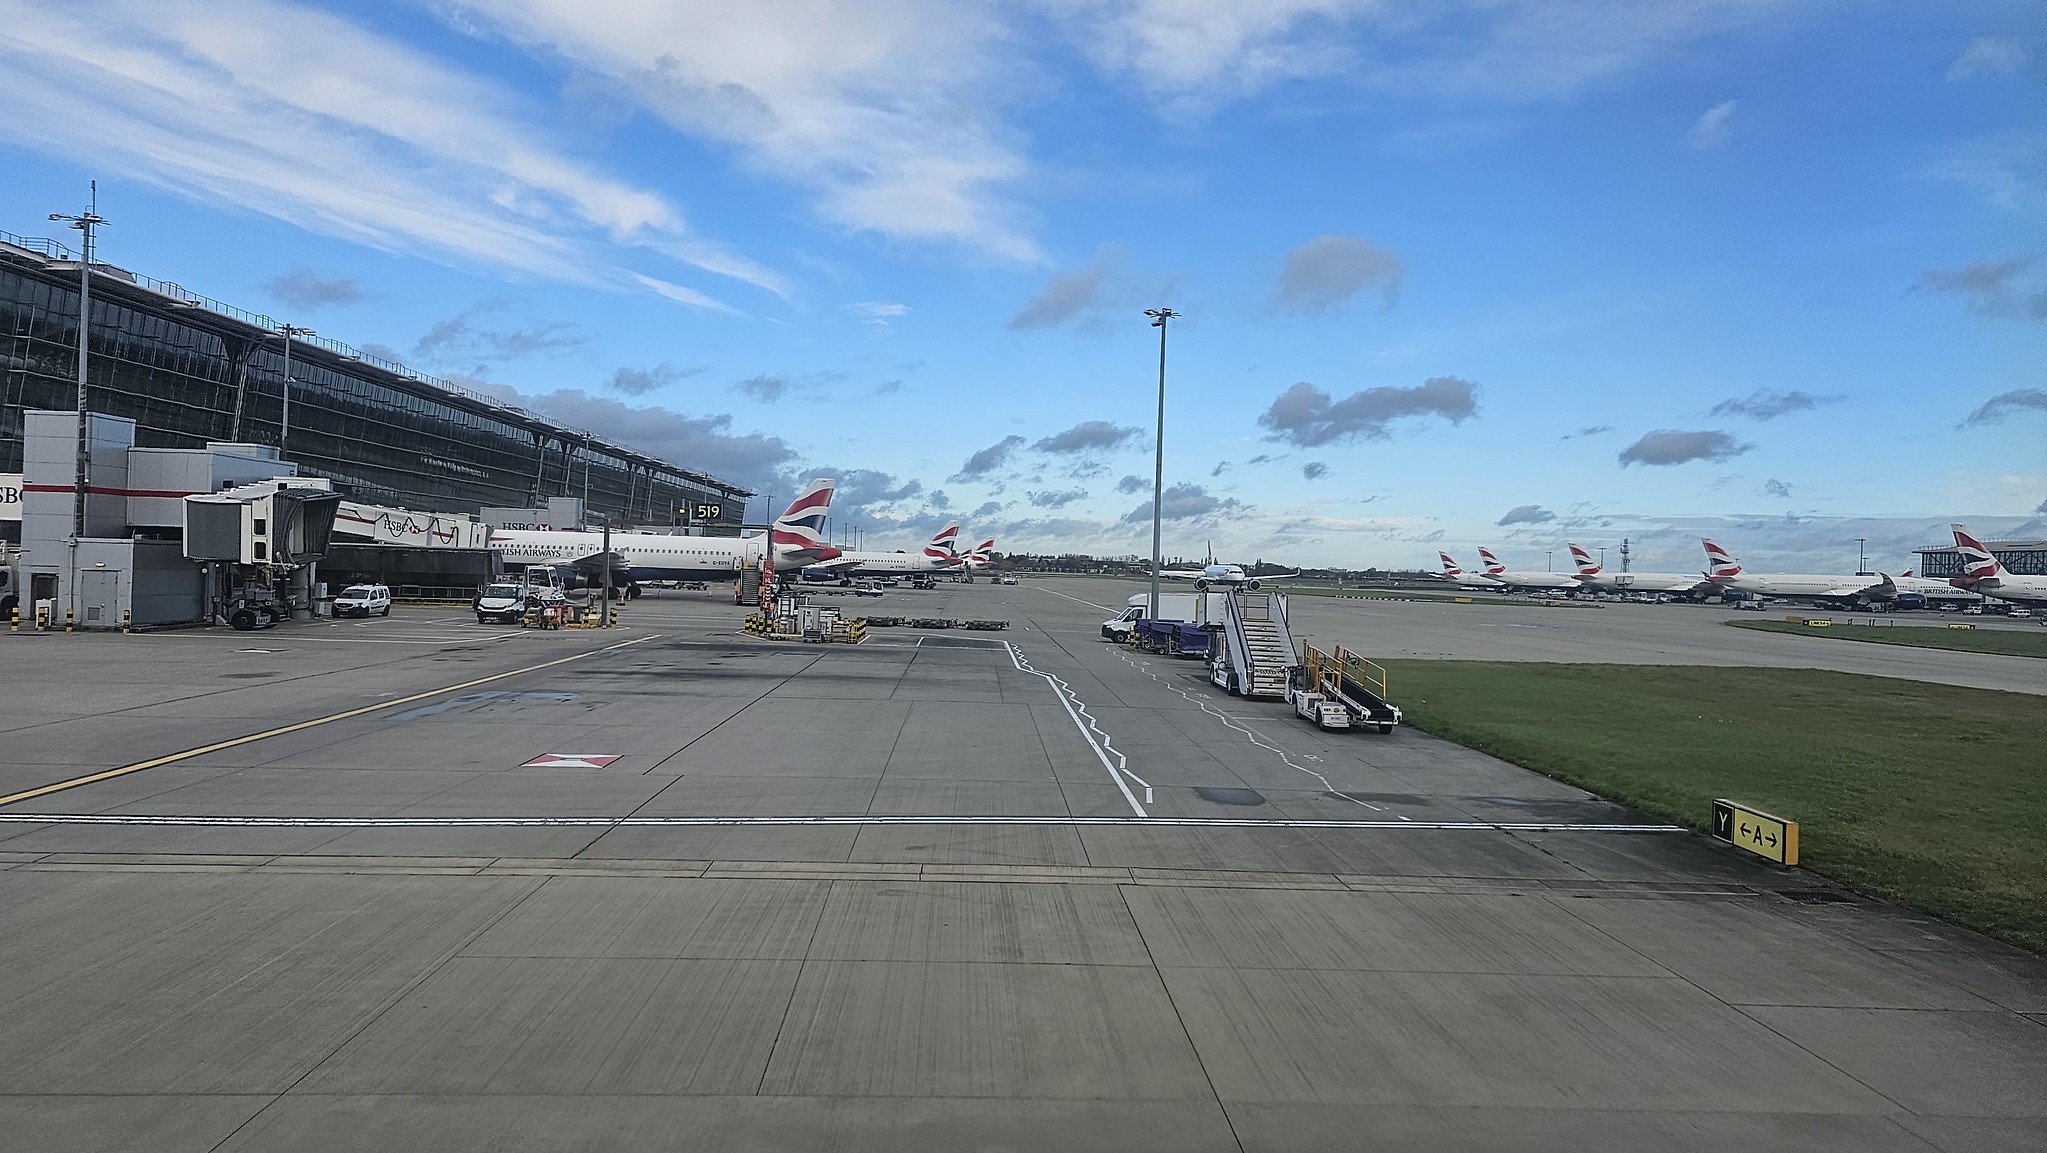 Arriving into Heathrow T5